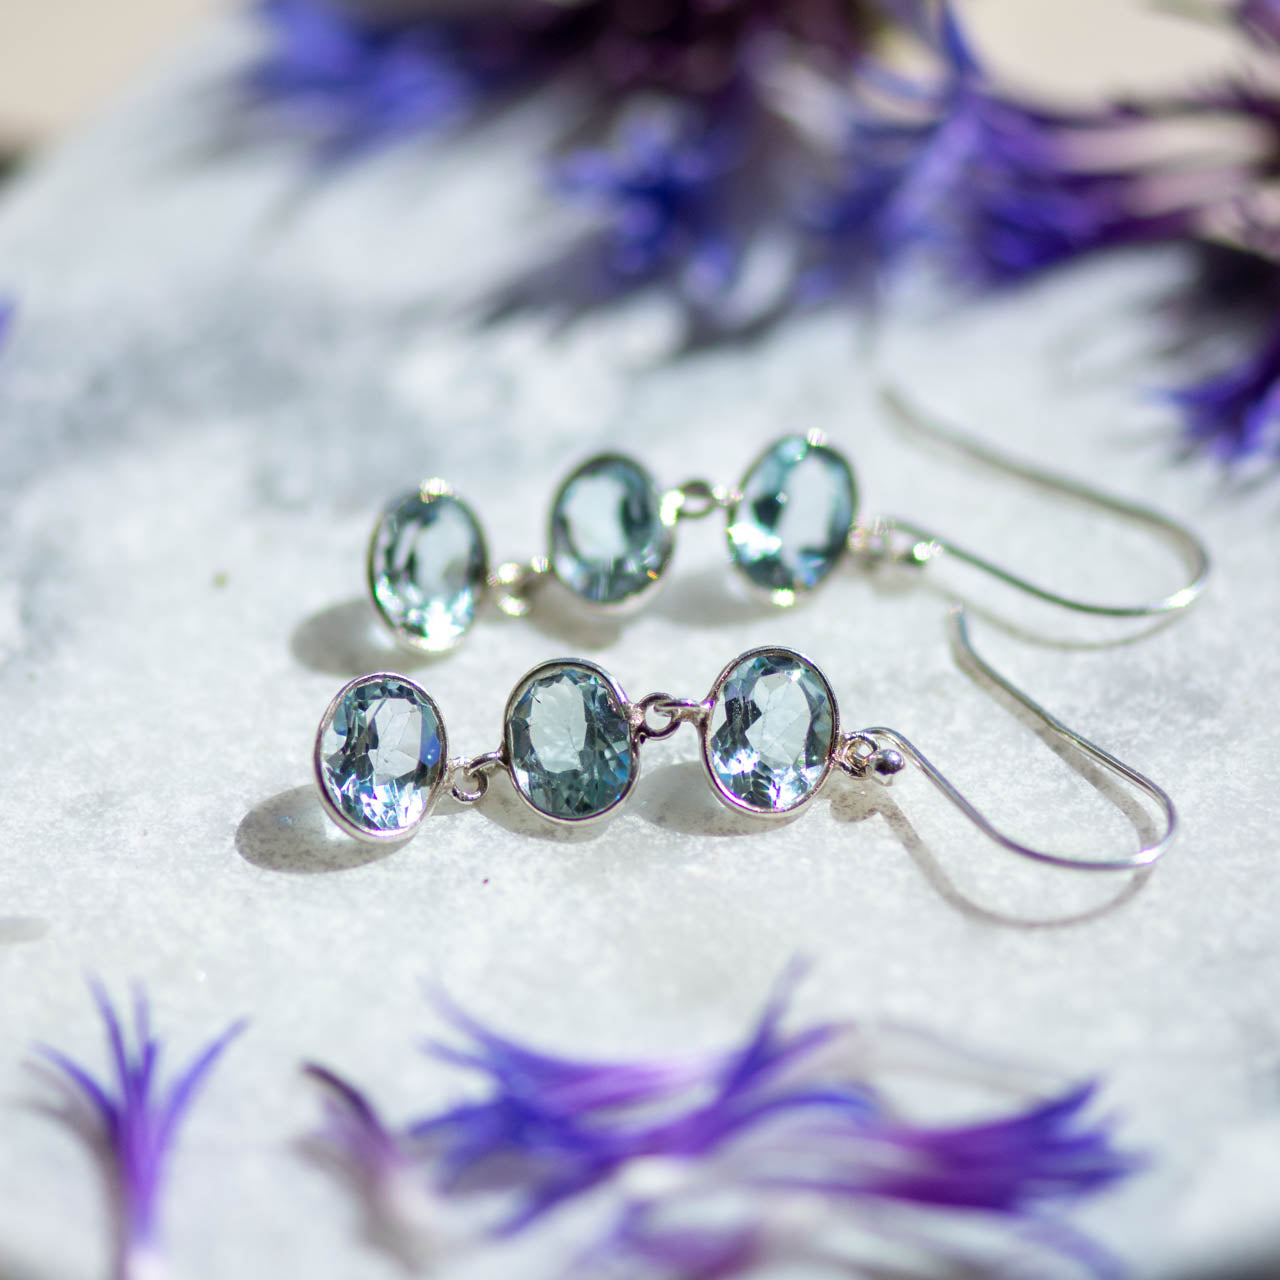 Kiki Necklace in Blue Topaz and Pink Tourmaline & Blue Topaz Trellis Earrings – Jewellery Set Memara 